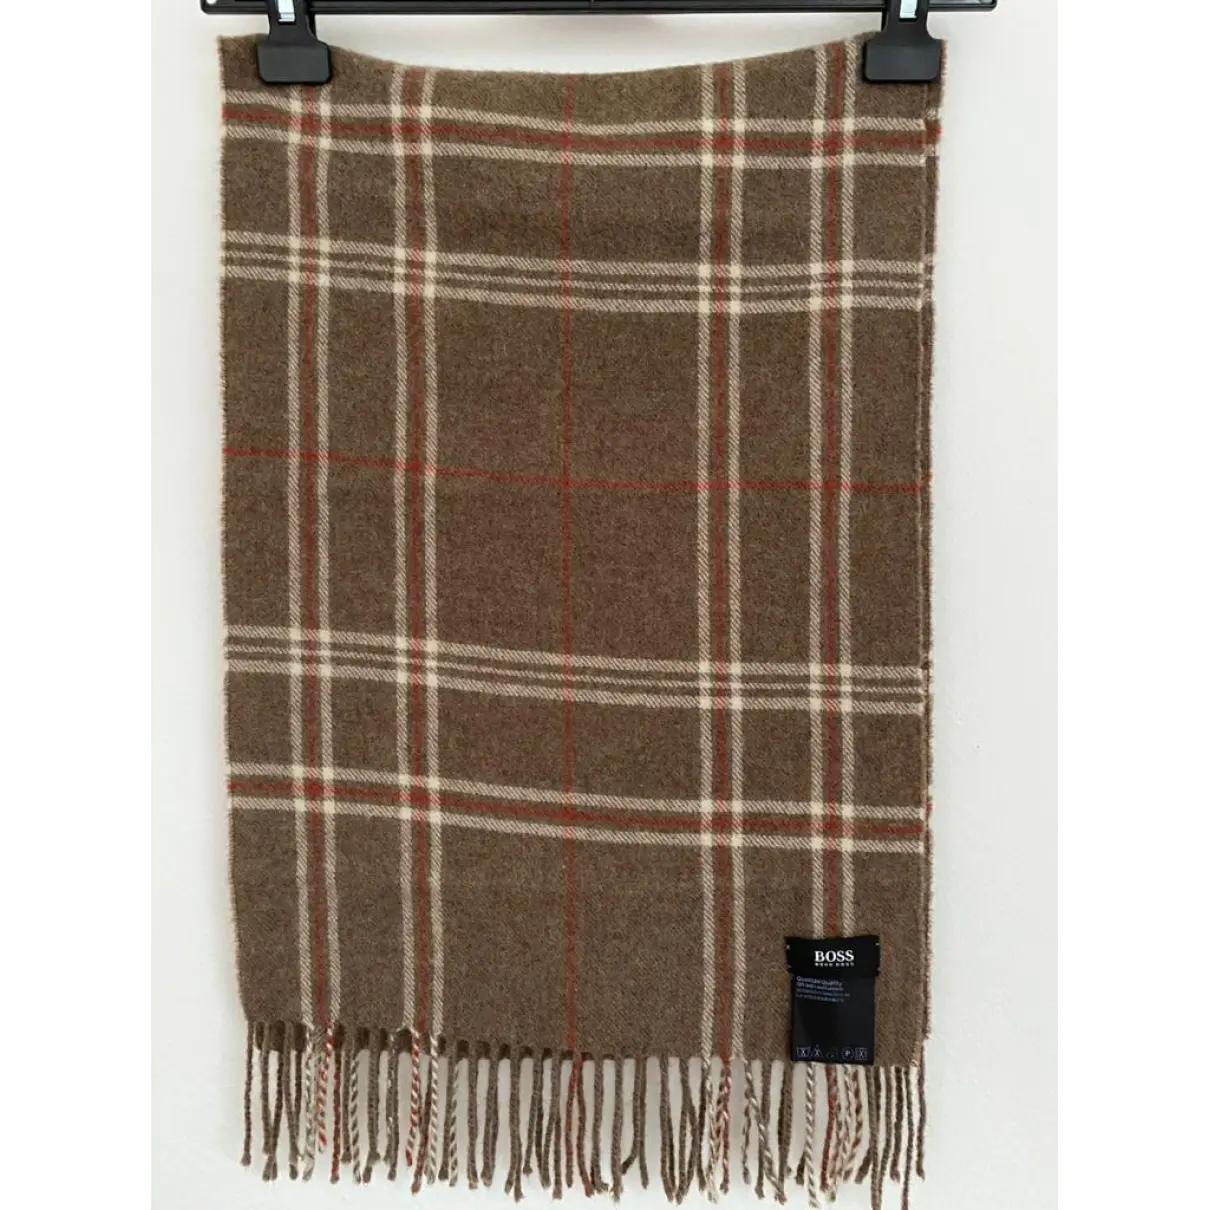 Hugo Boss Wool scarf & pocket square for sale